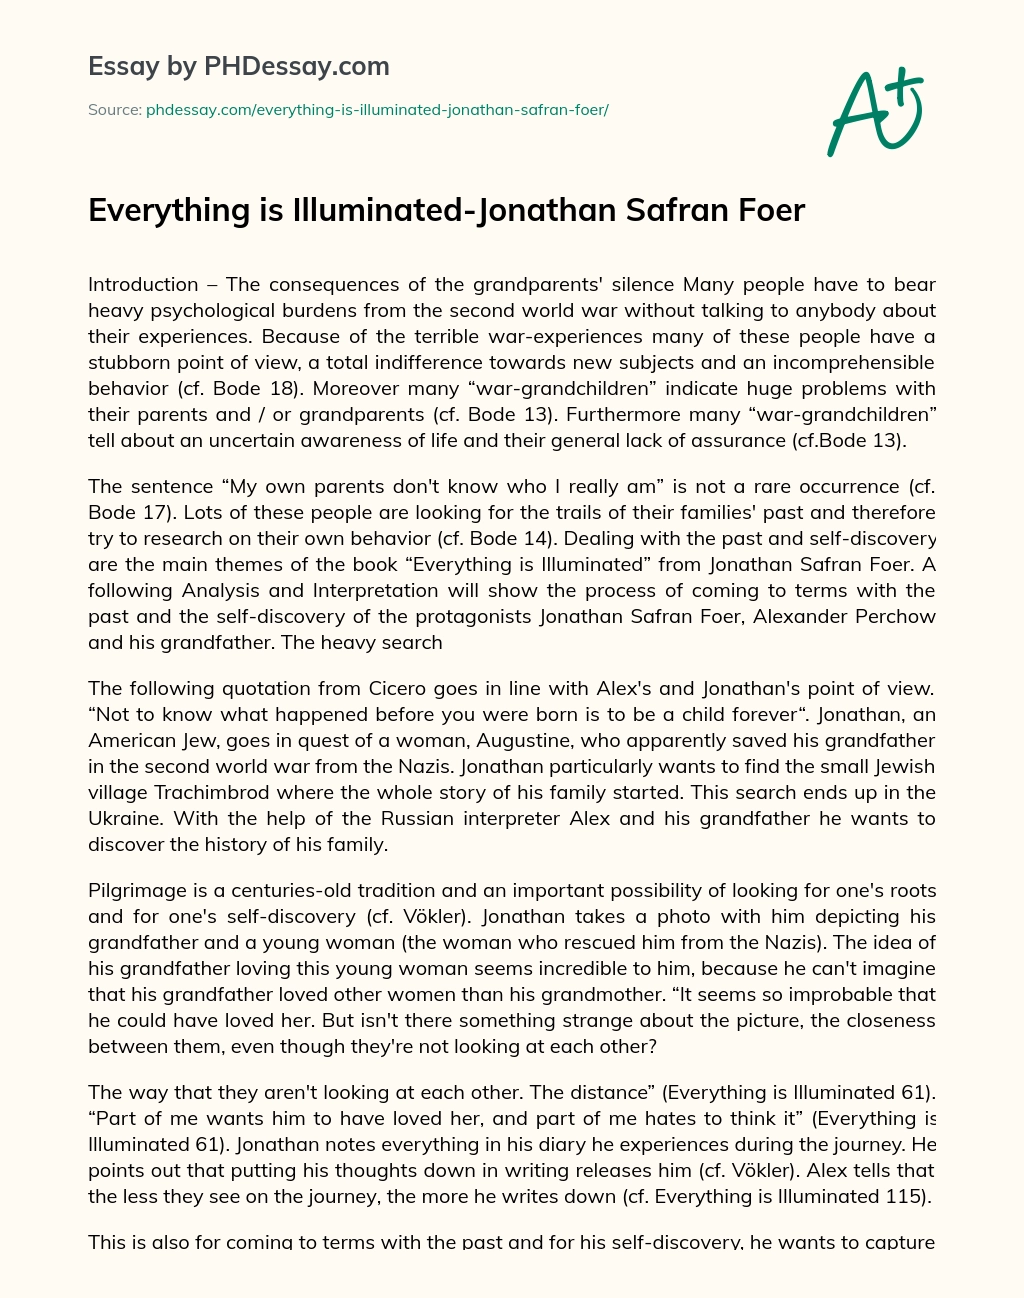 Everything is Illuminated-Jonathan Safran Foer essay